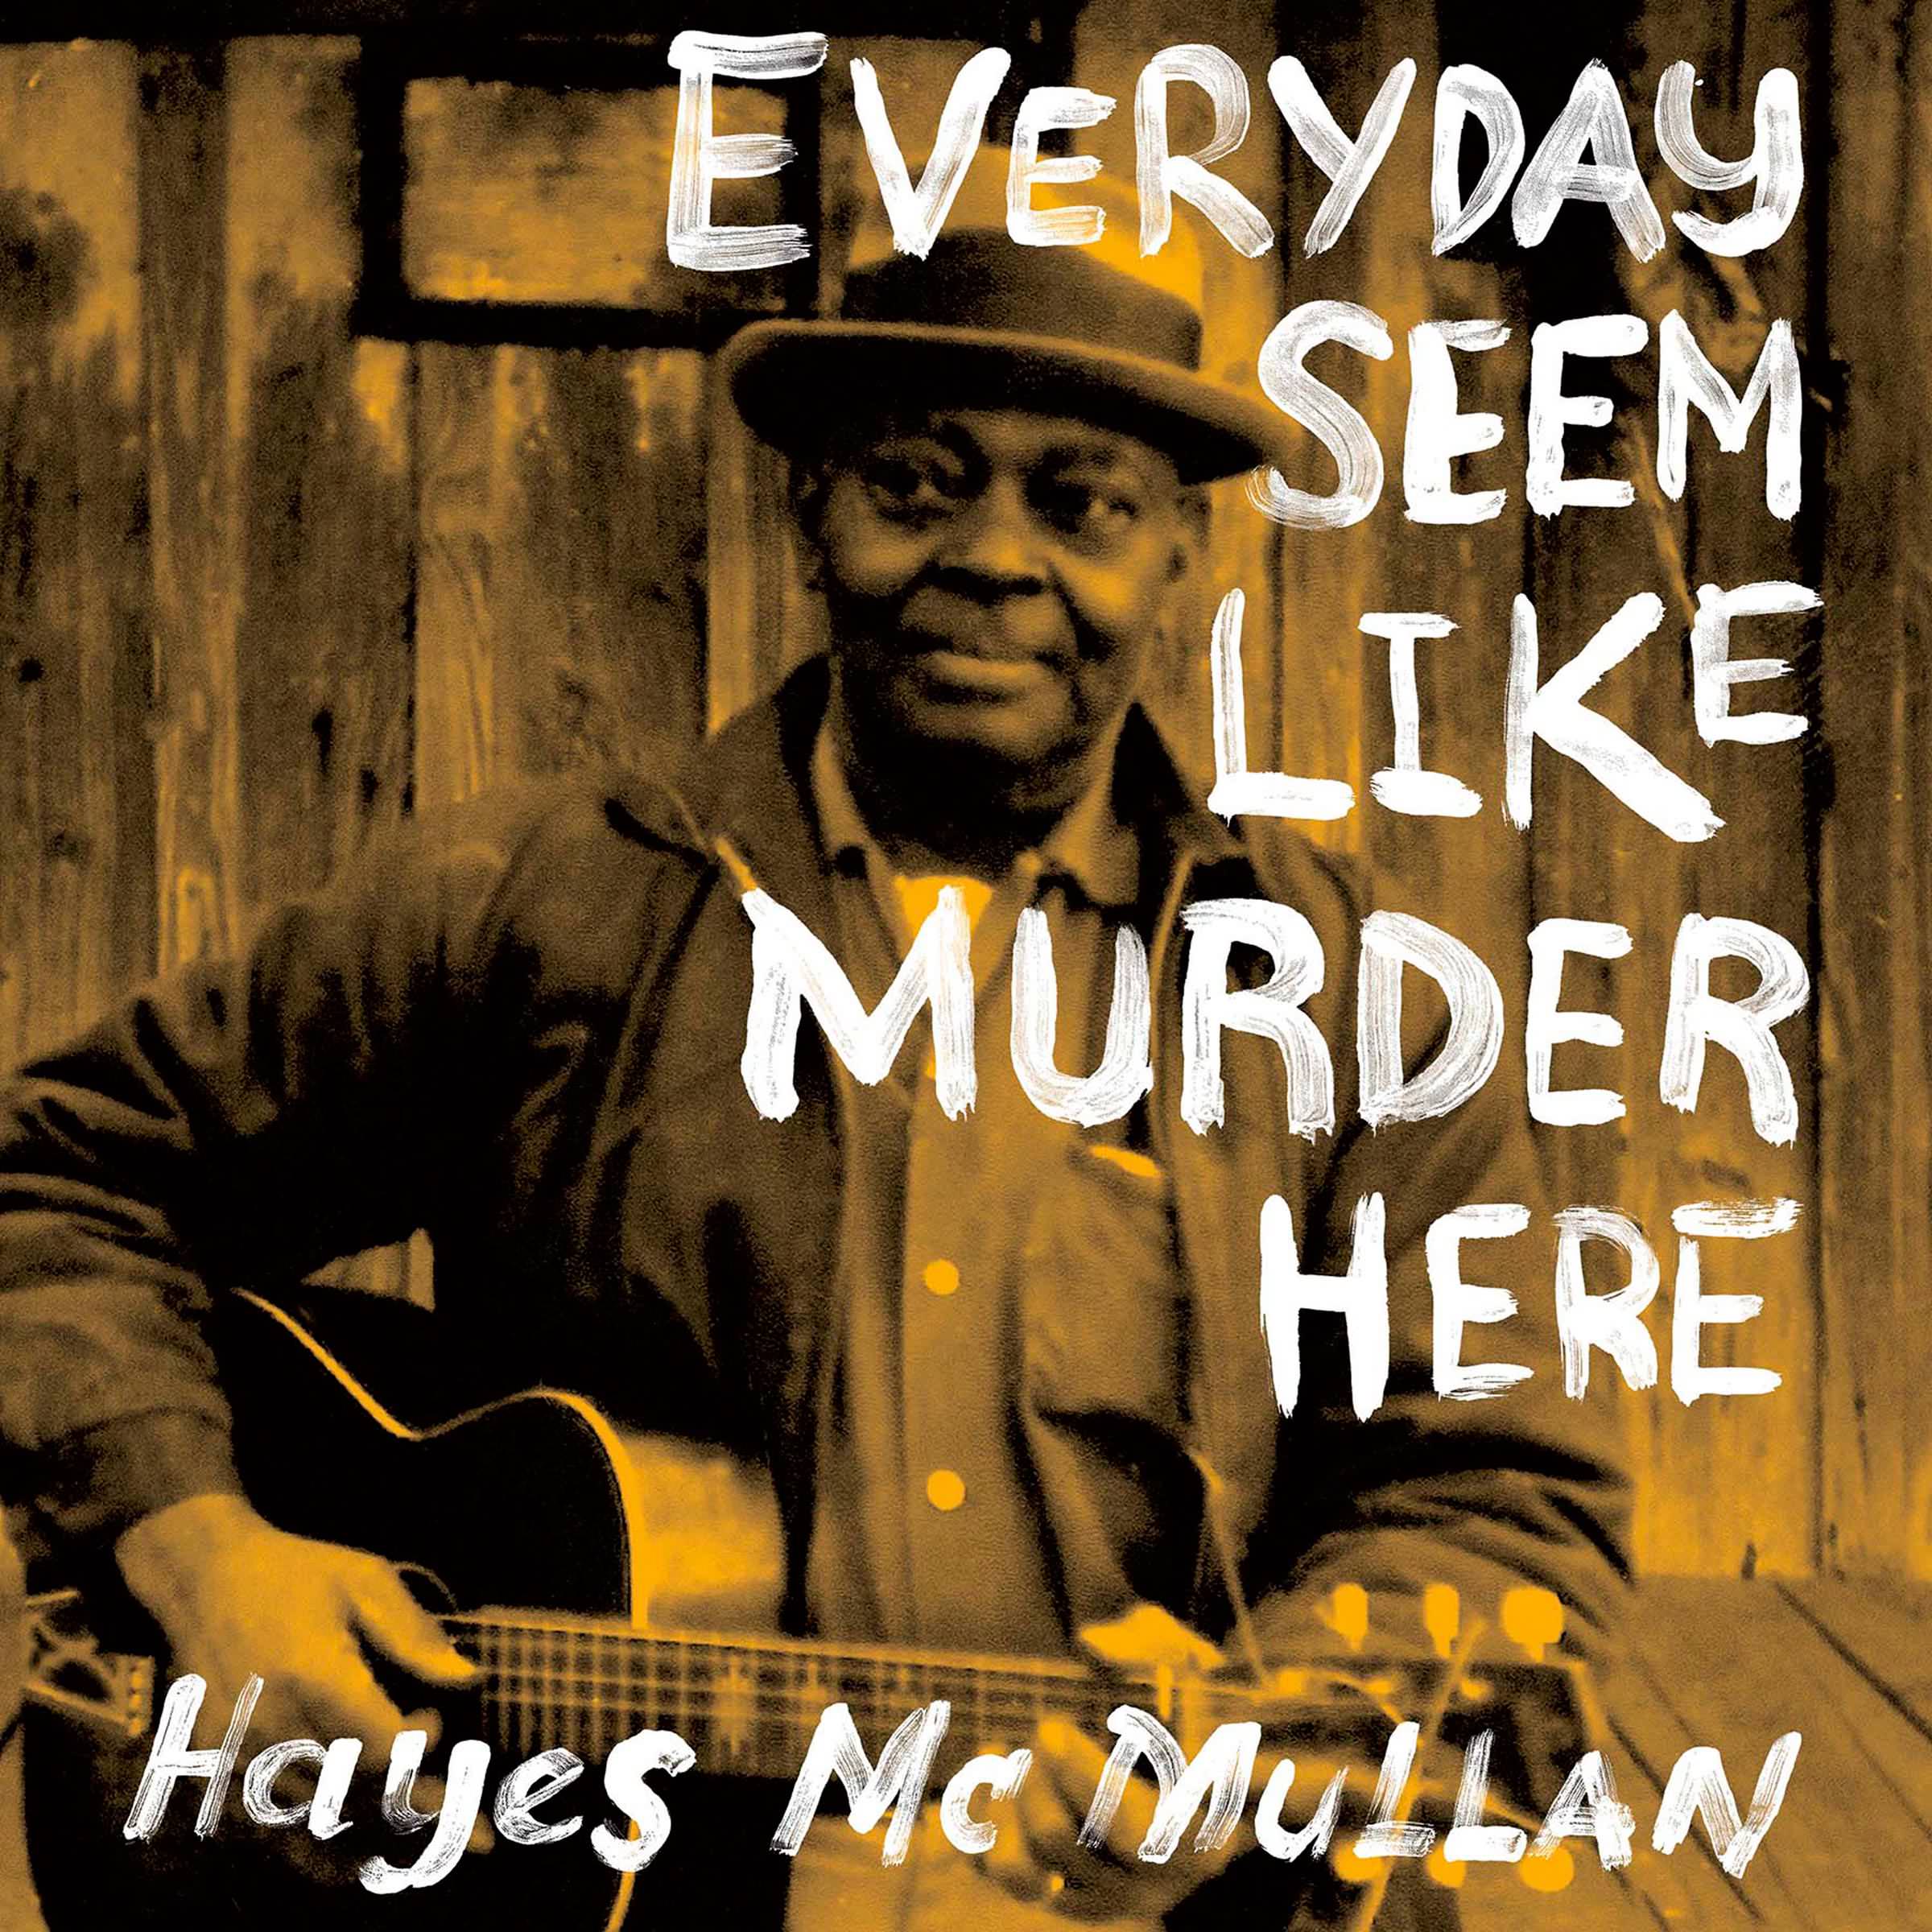 Hayes McMullan - Everyday Seem Like Murder Here (2017) [HDTracks FLAC 24bit/44,1kHz]